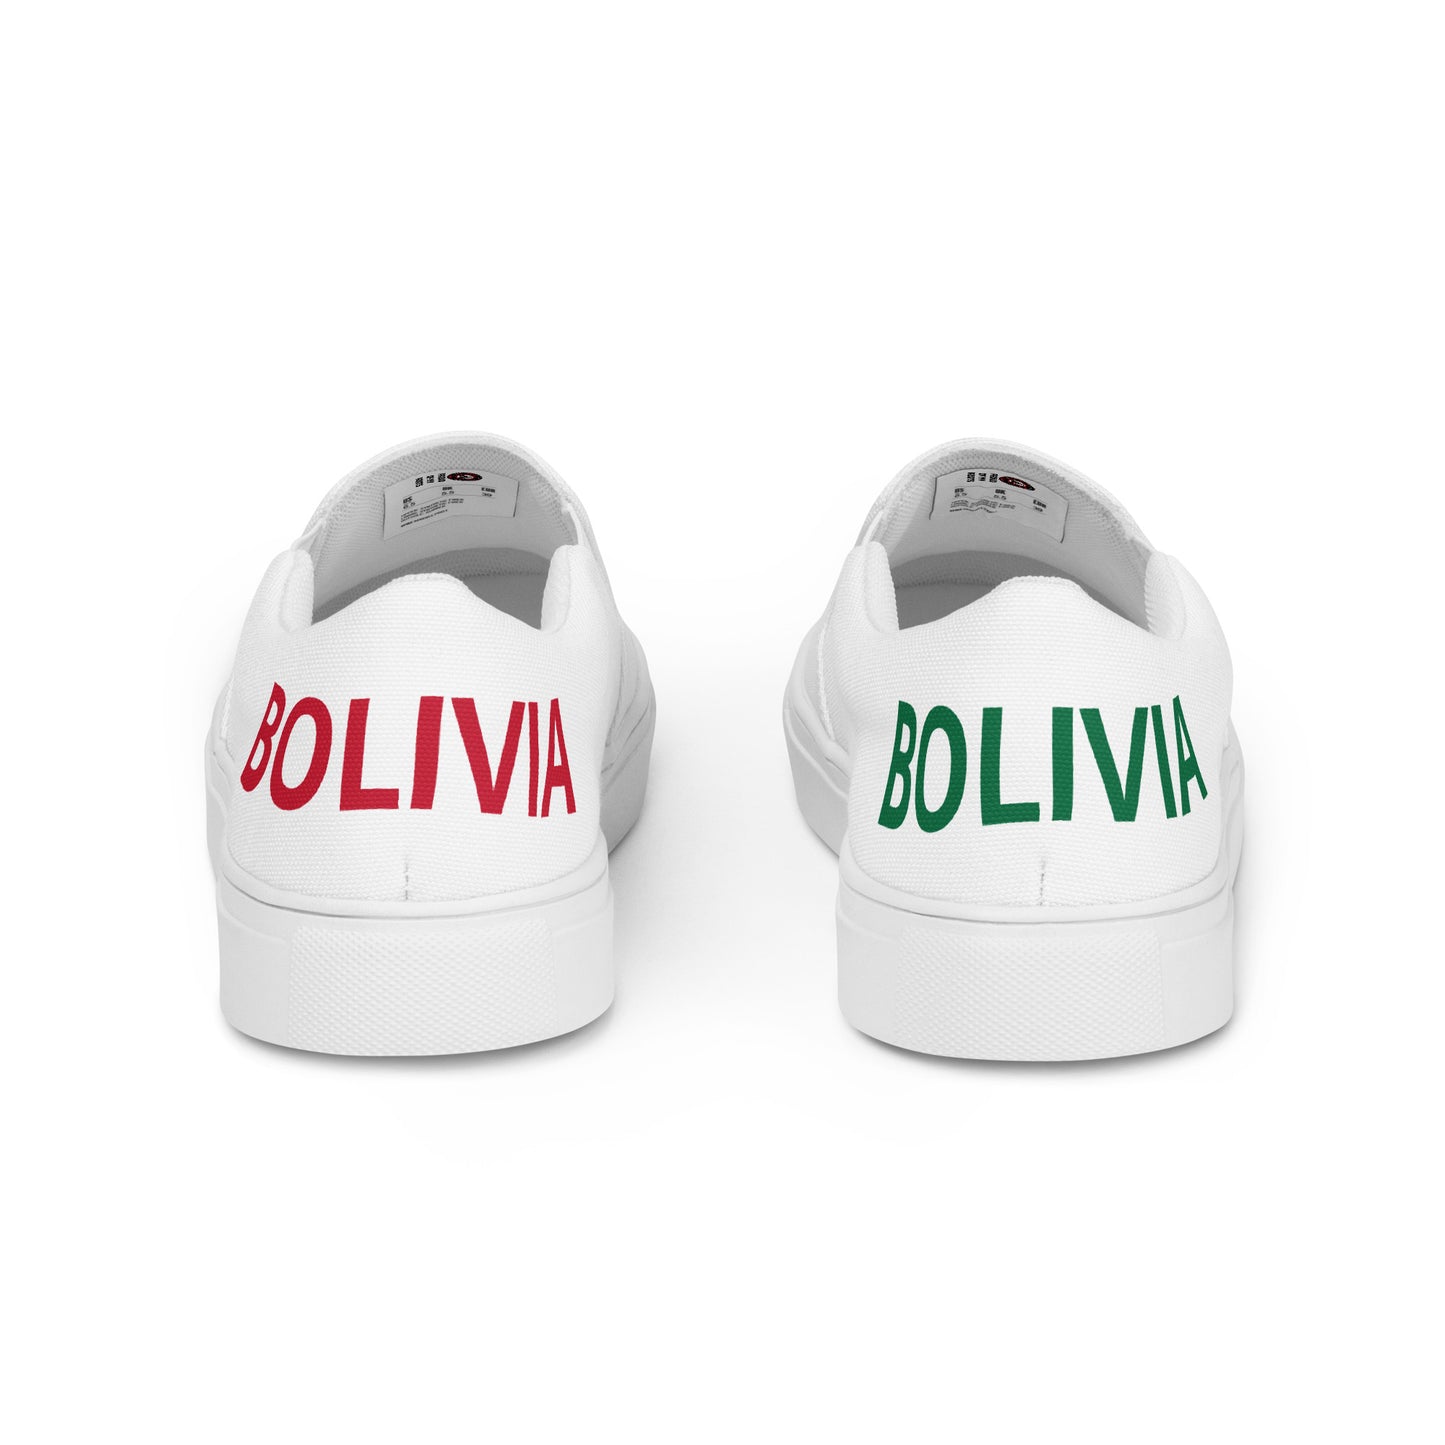 Bolivia - Women - White - Slip-on shoes